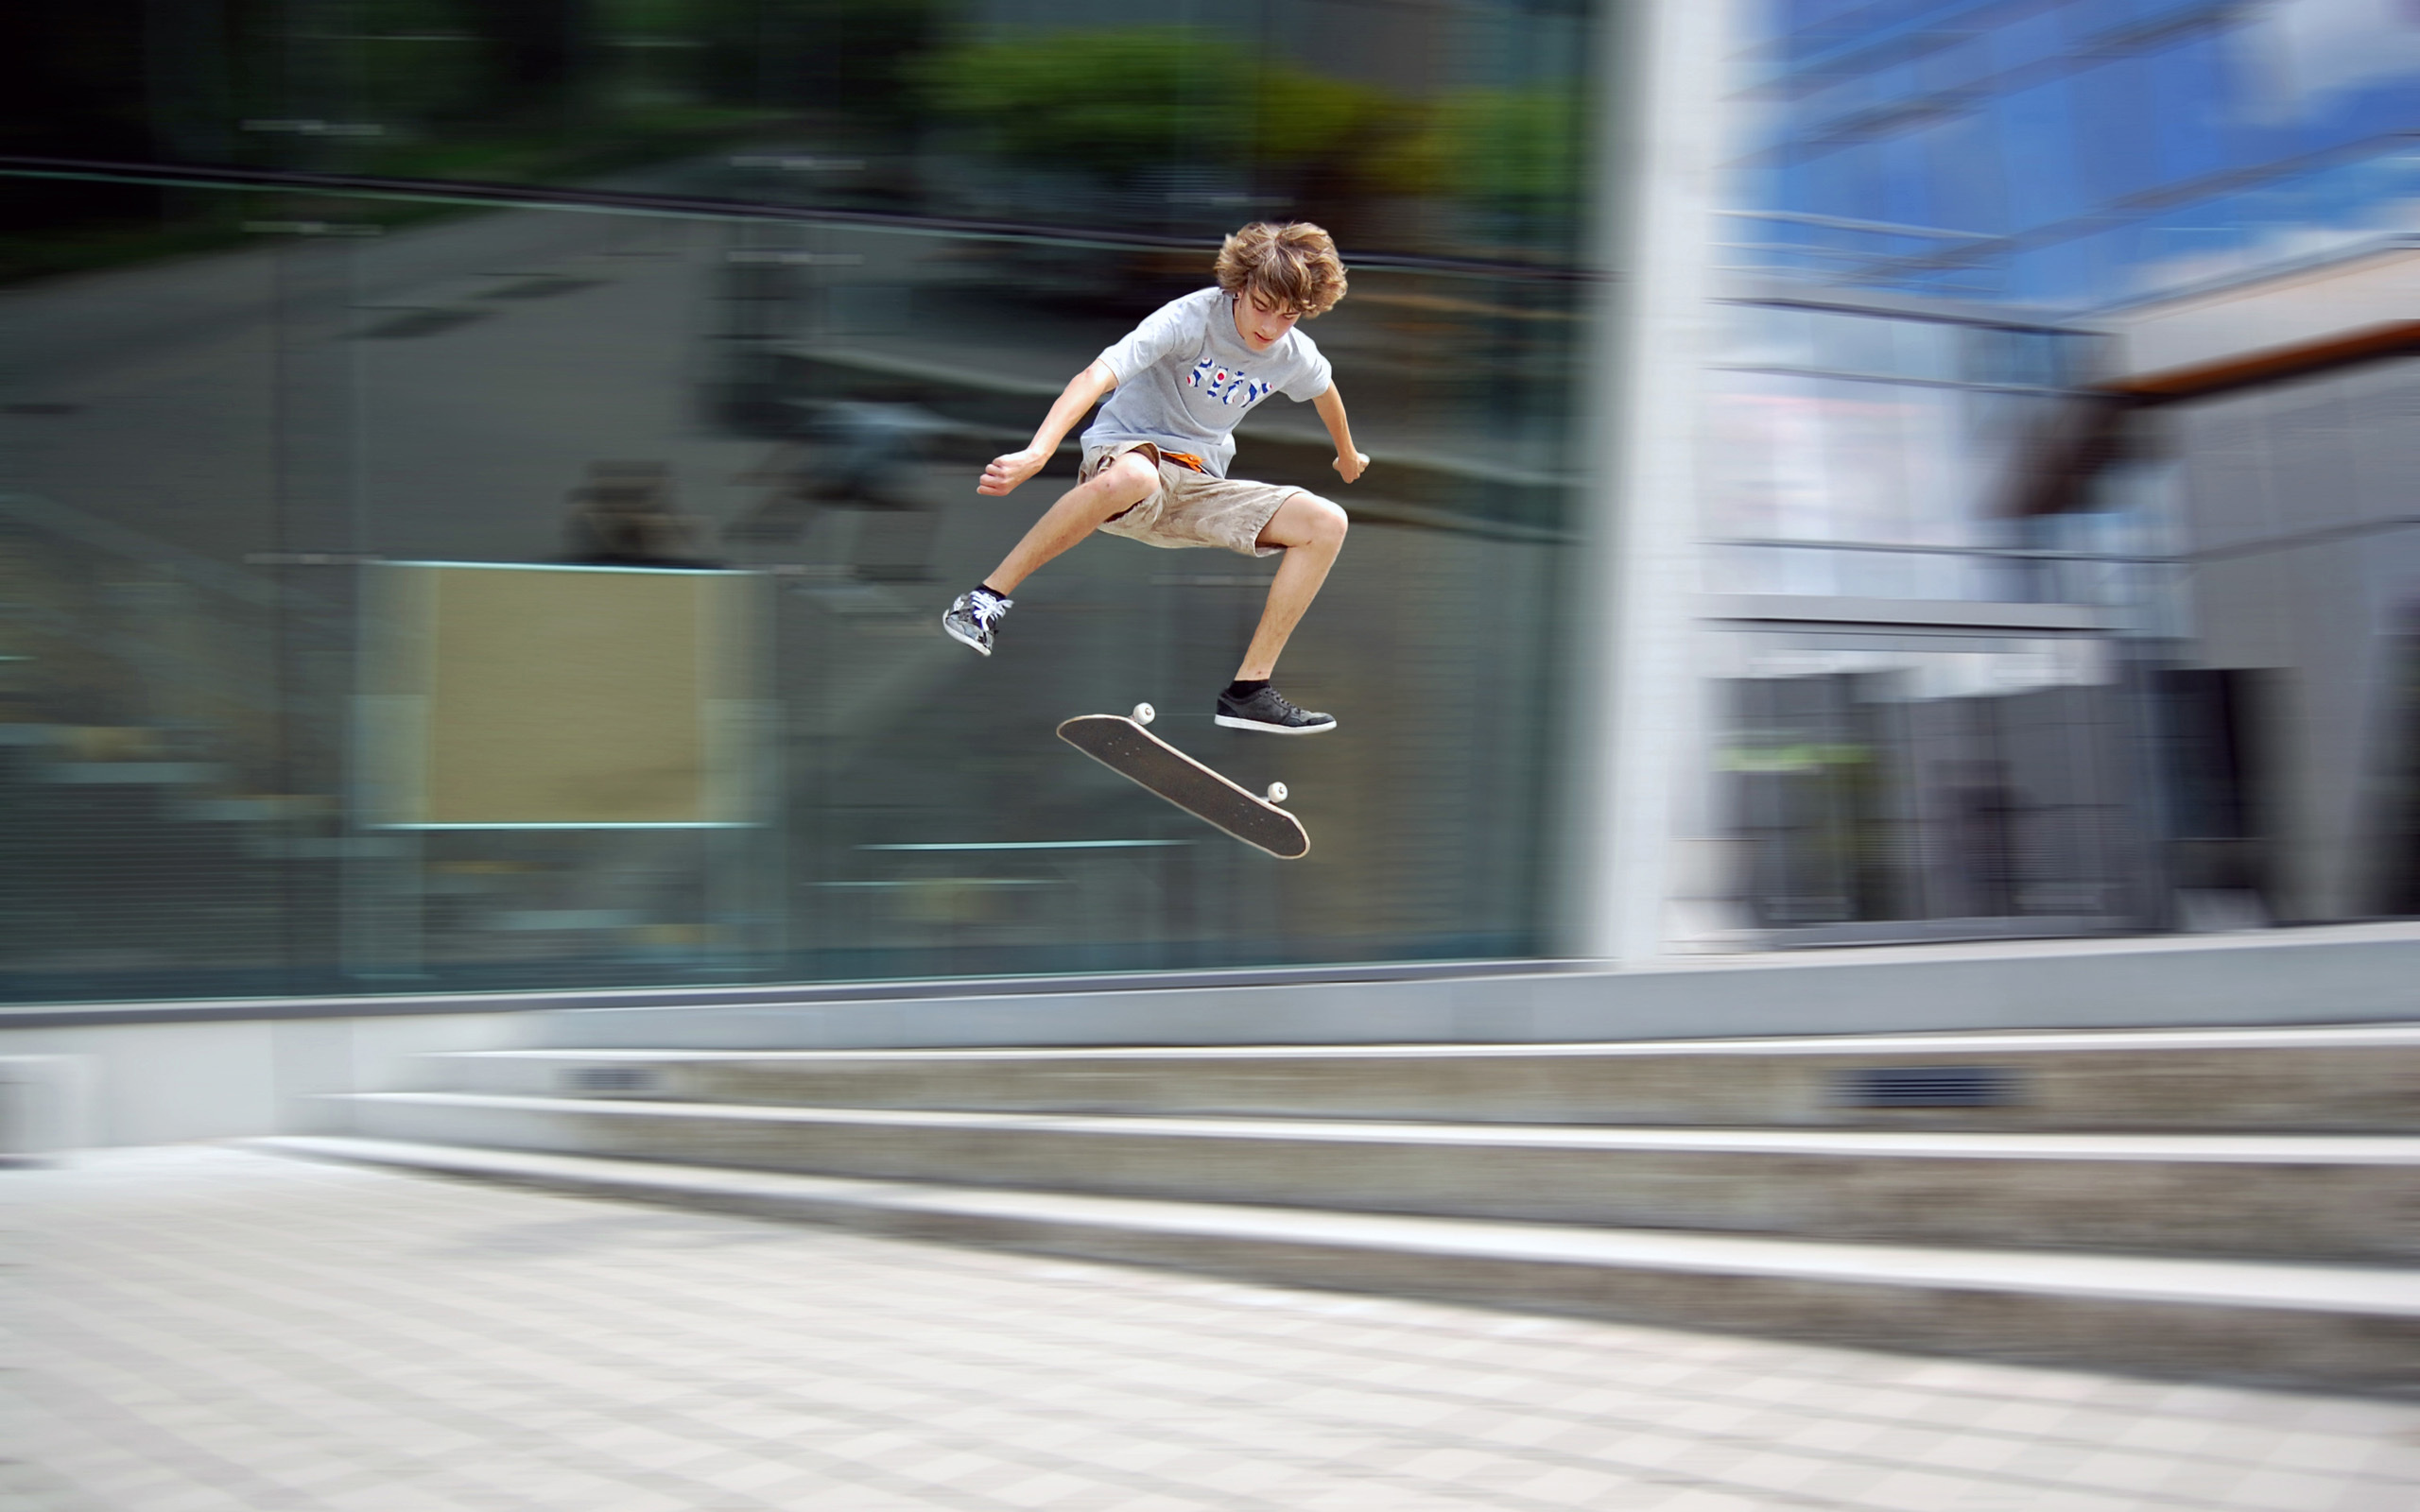 Skateboarding desktop wallpaper with sports theme